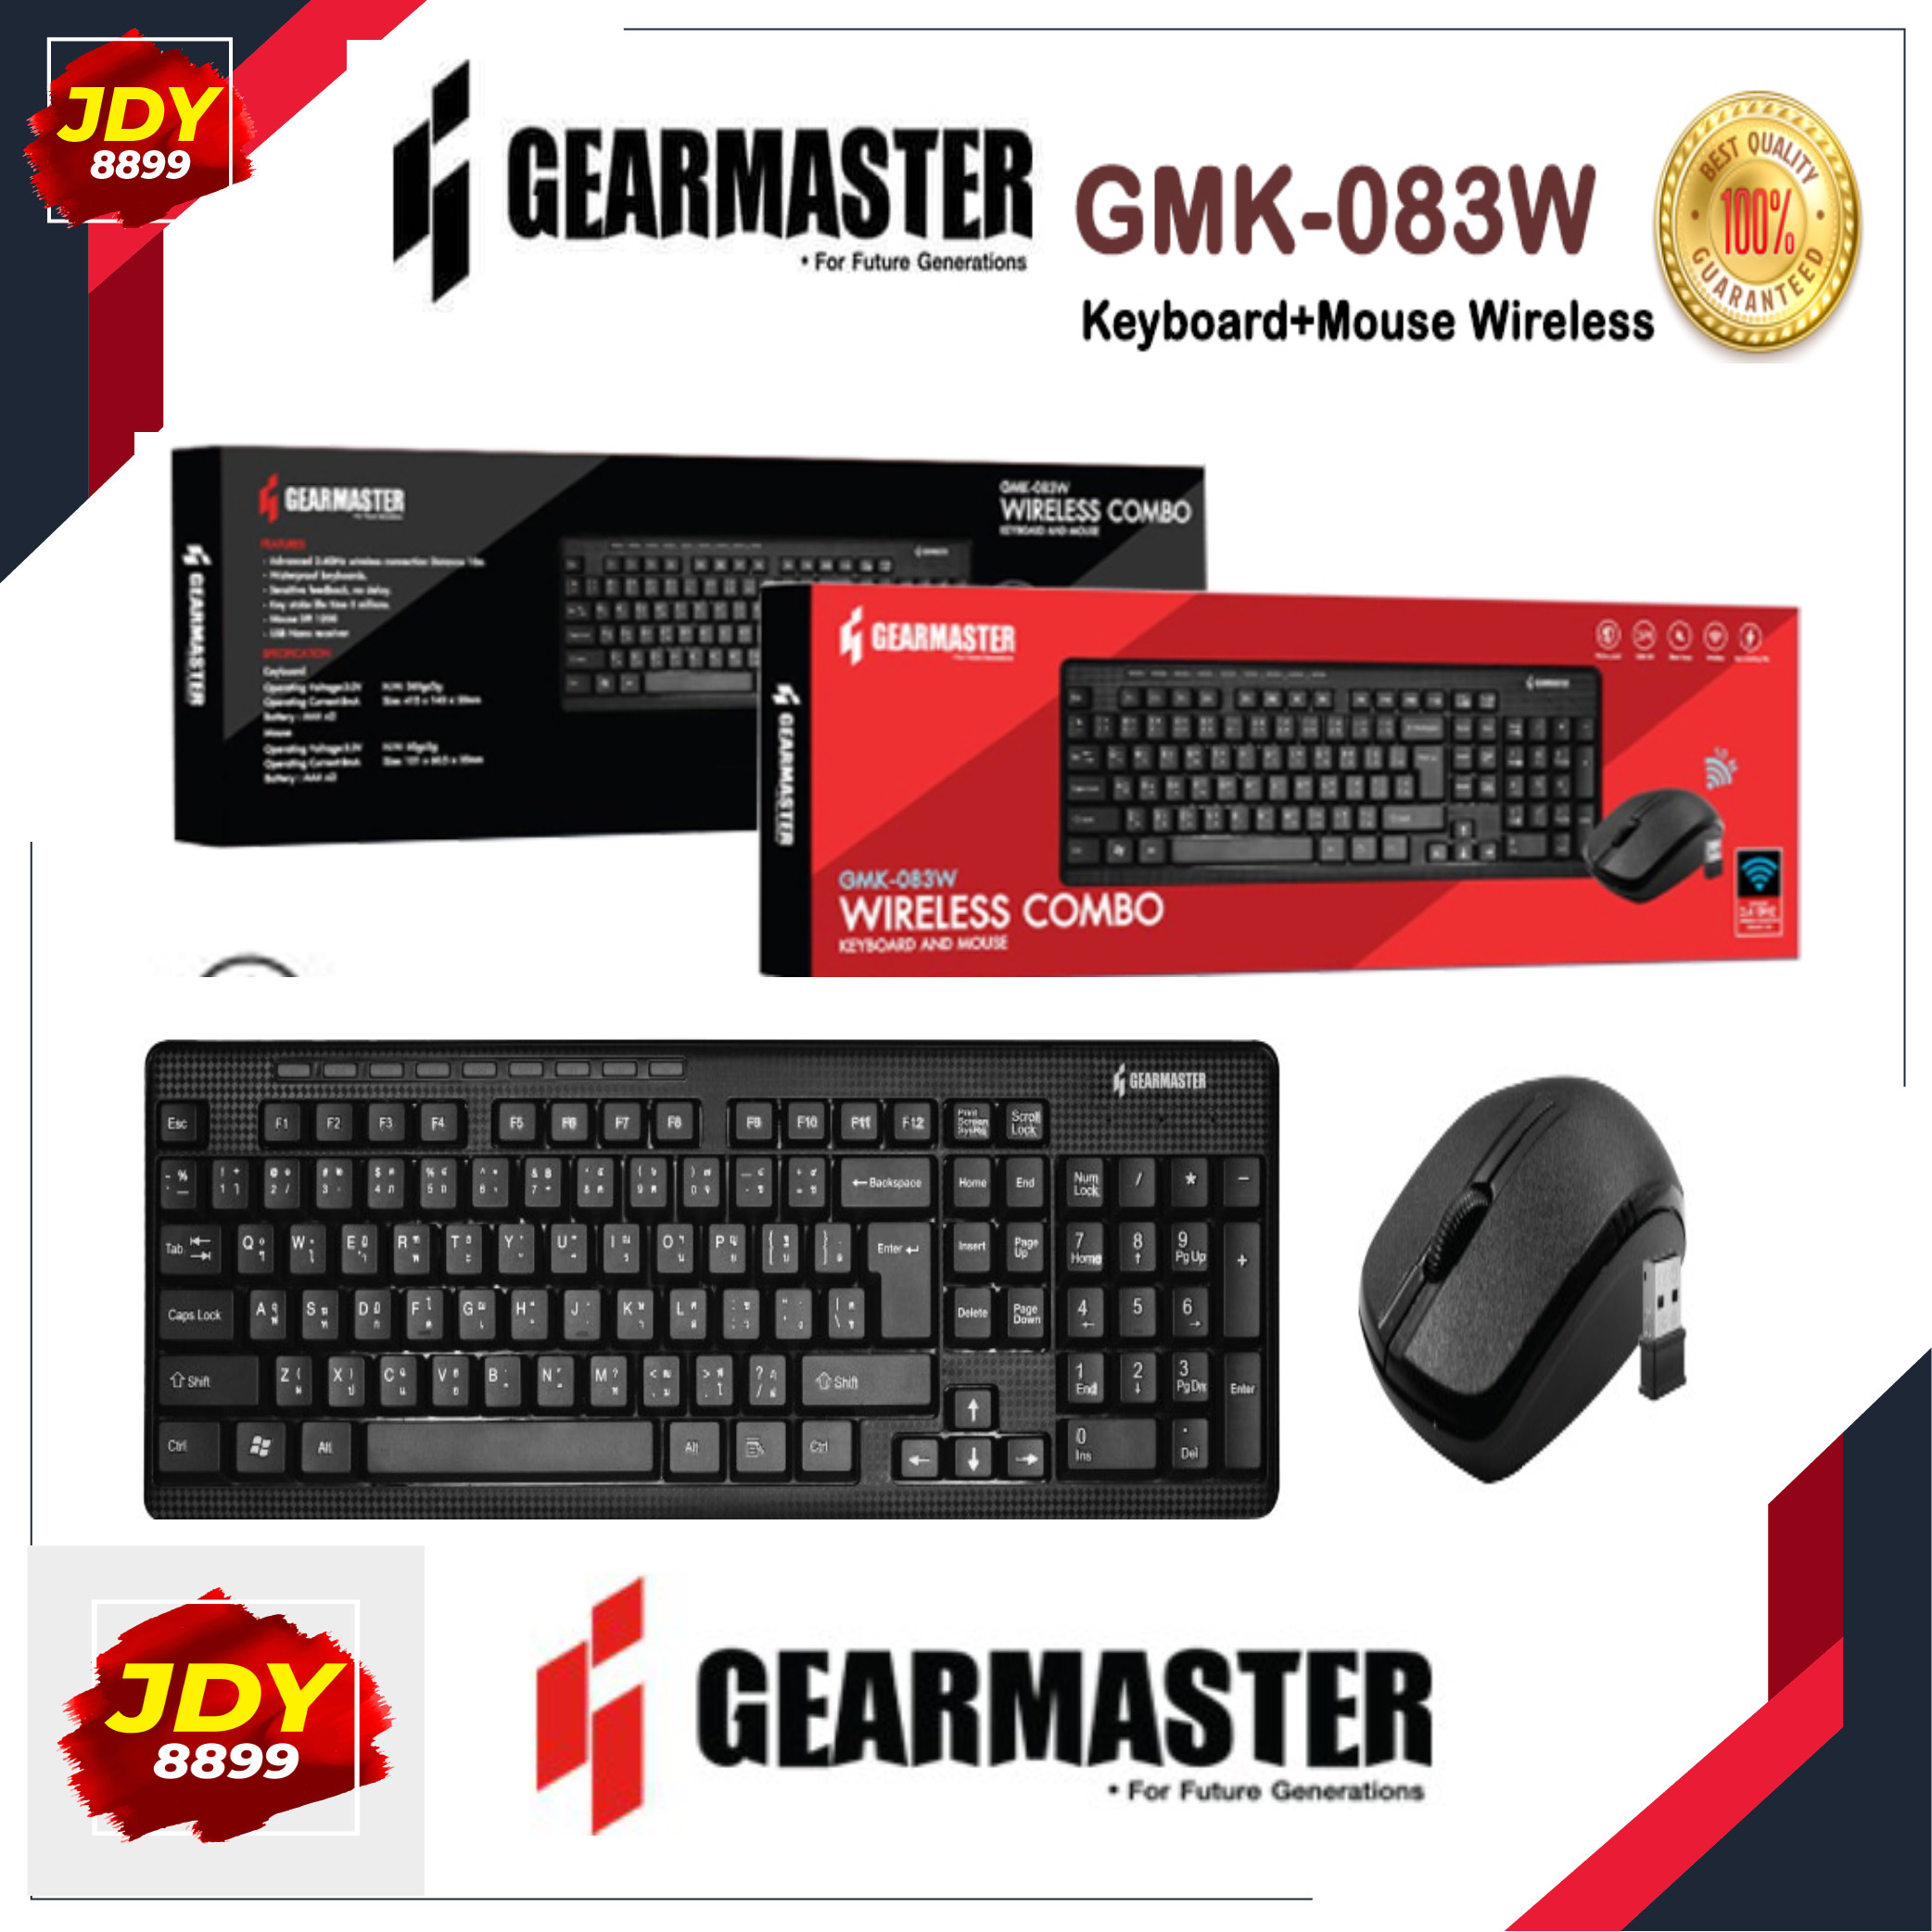 GEARMASTER GMK-083W ของแท้ 100% คีย์บอร์ดและเม้าท์ไร้สาย Keyboard+Mouse Wireless JDY8899